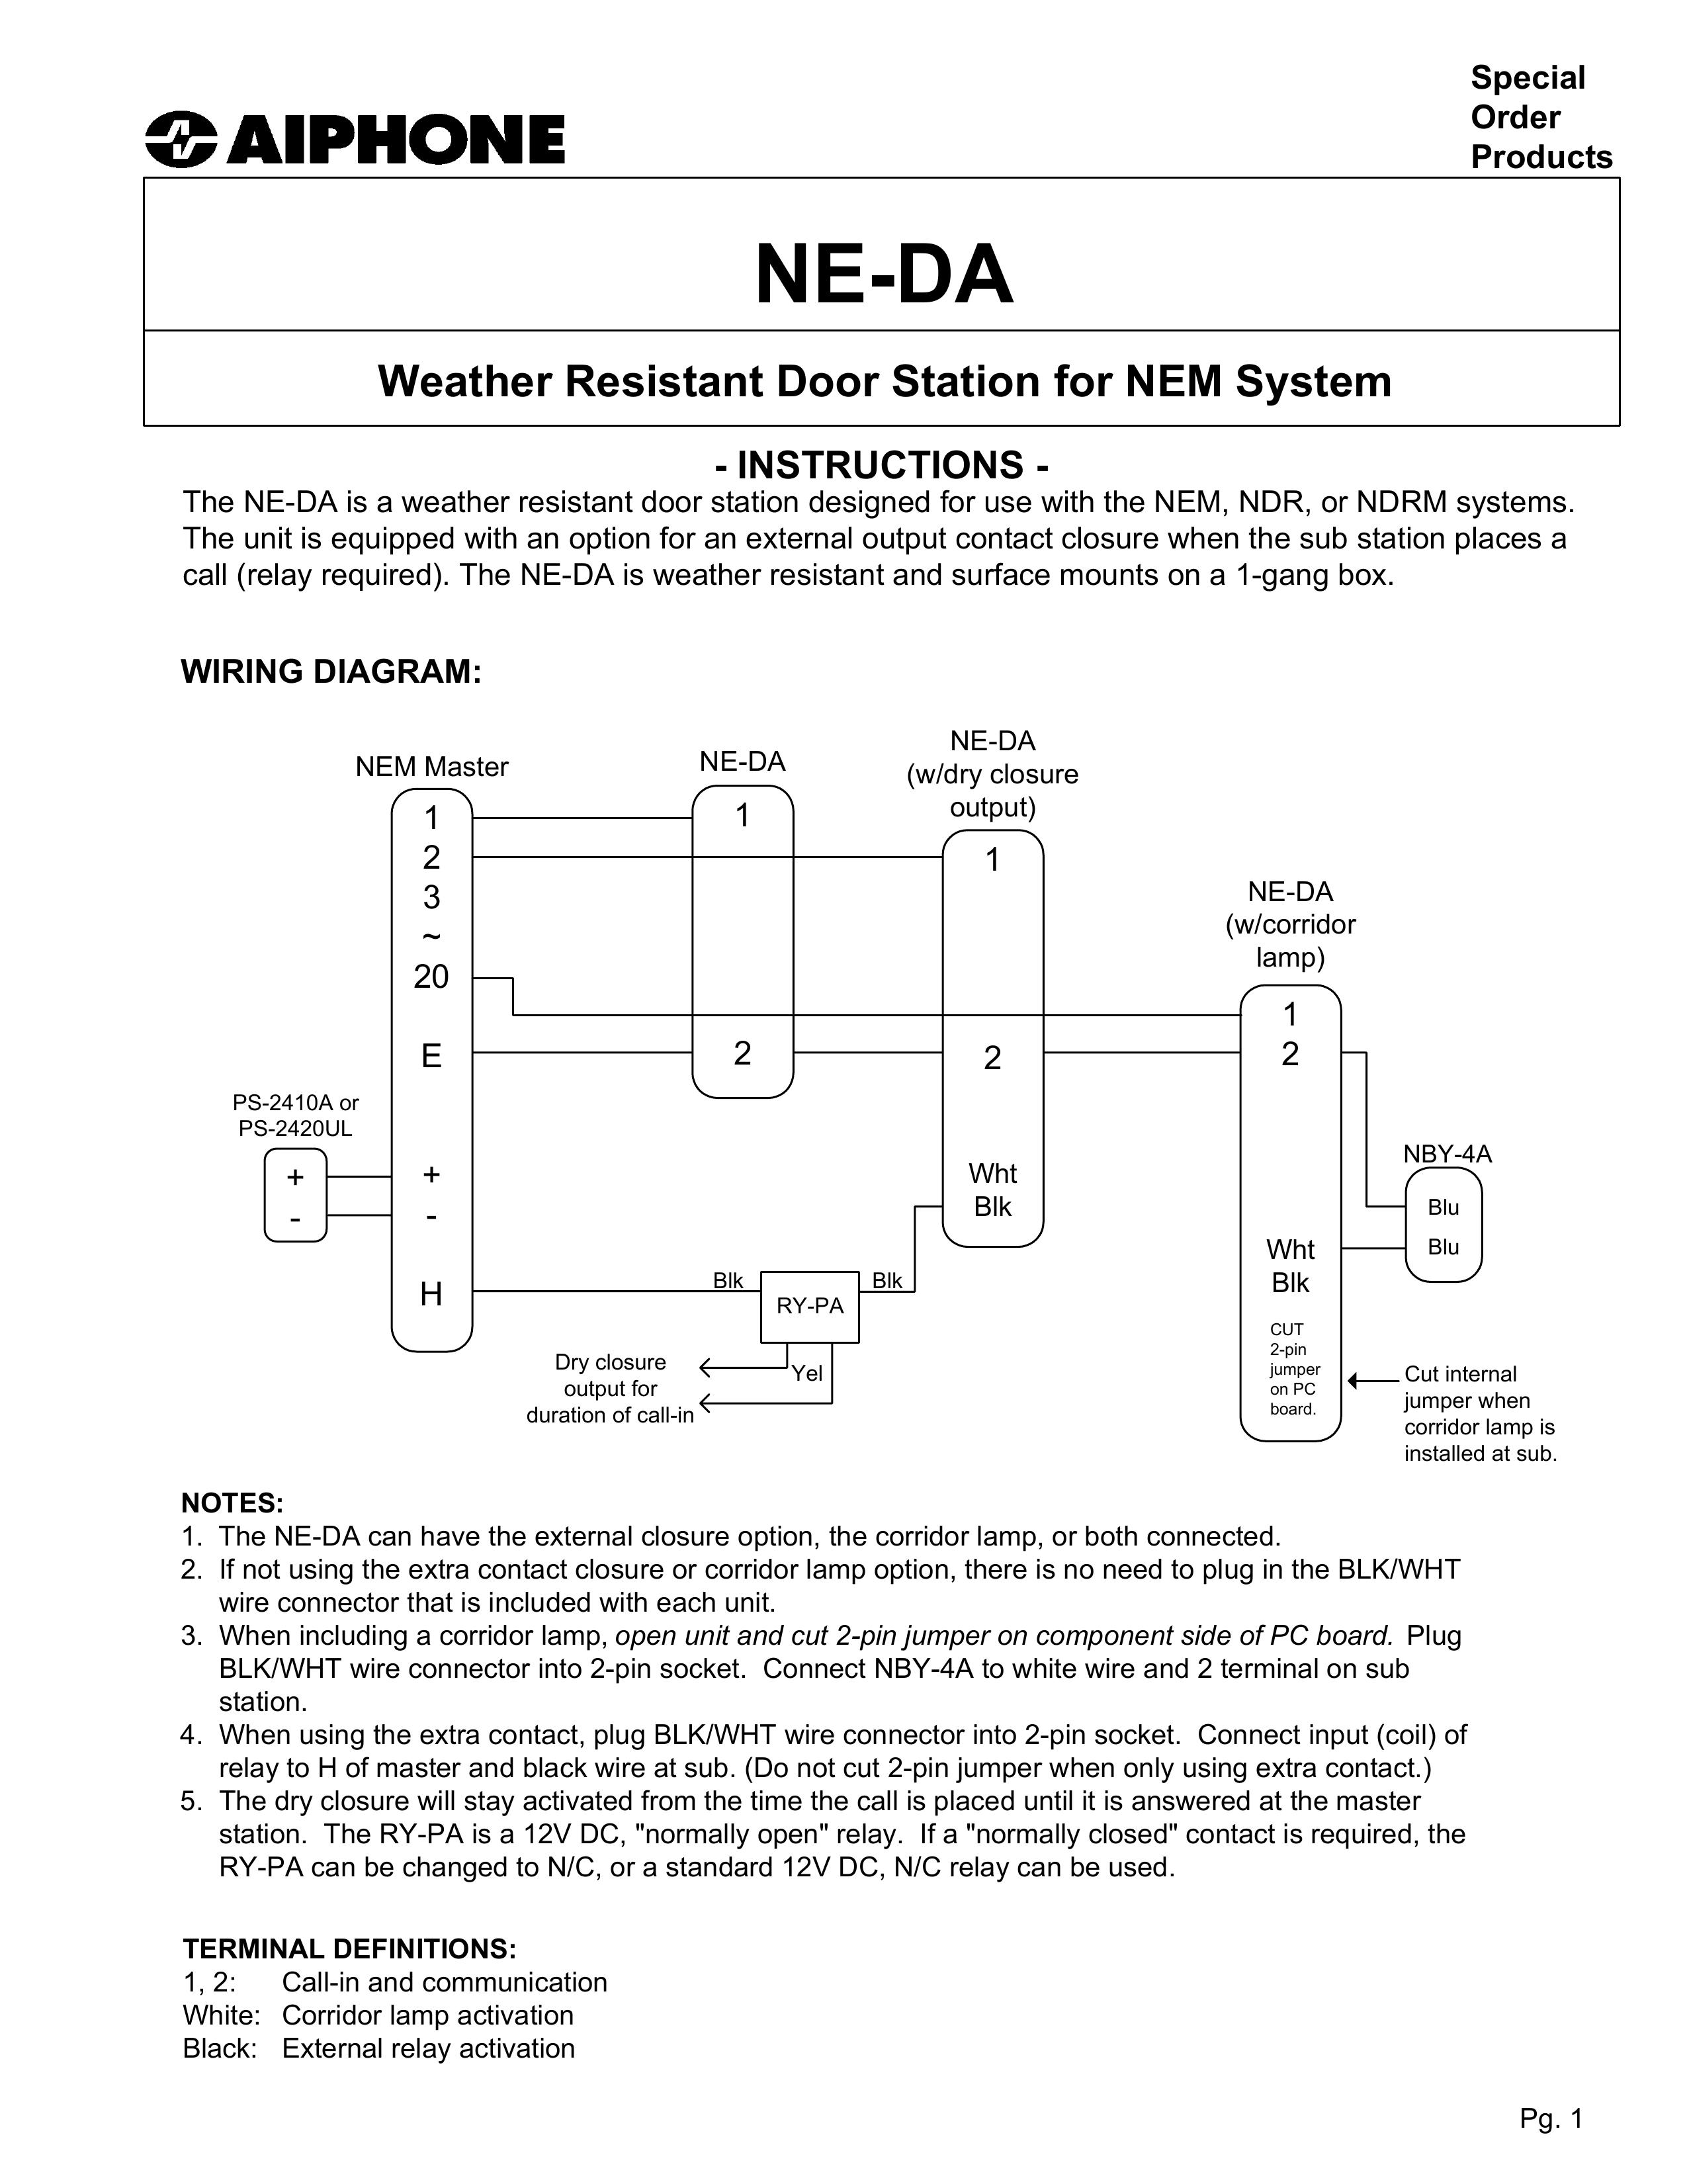 Aiphone NE-DA Weather Radio User Manual